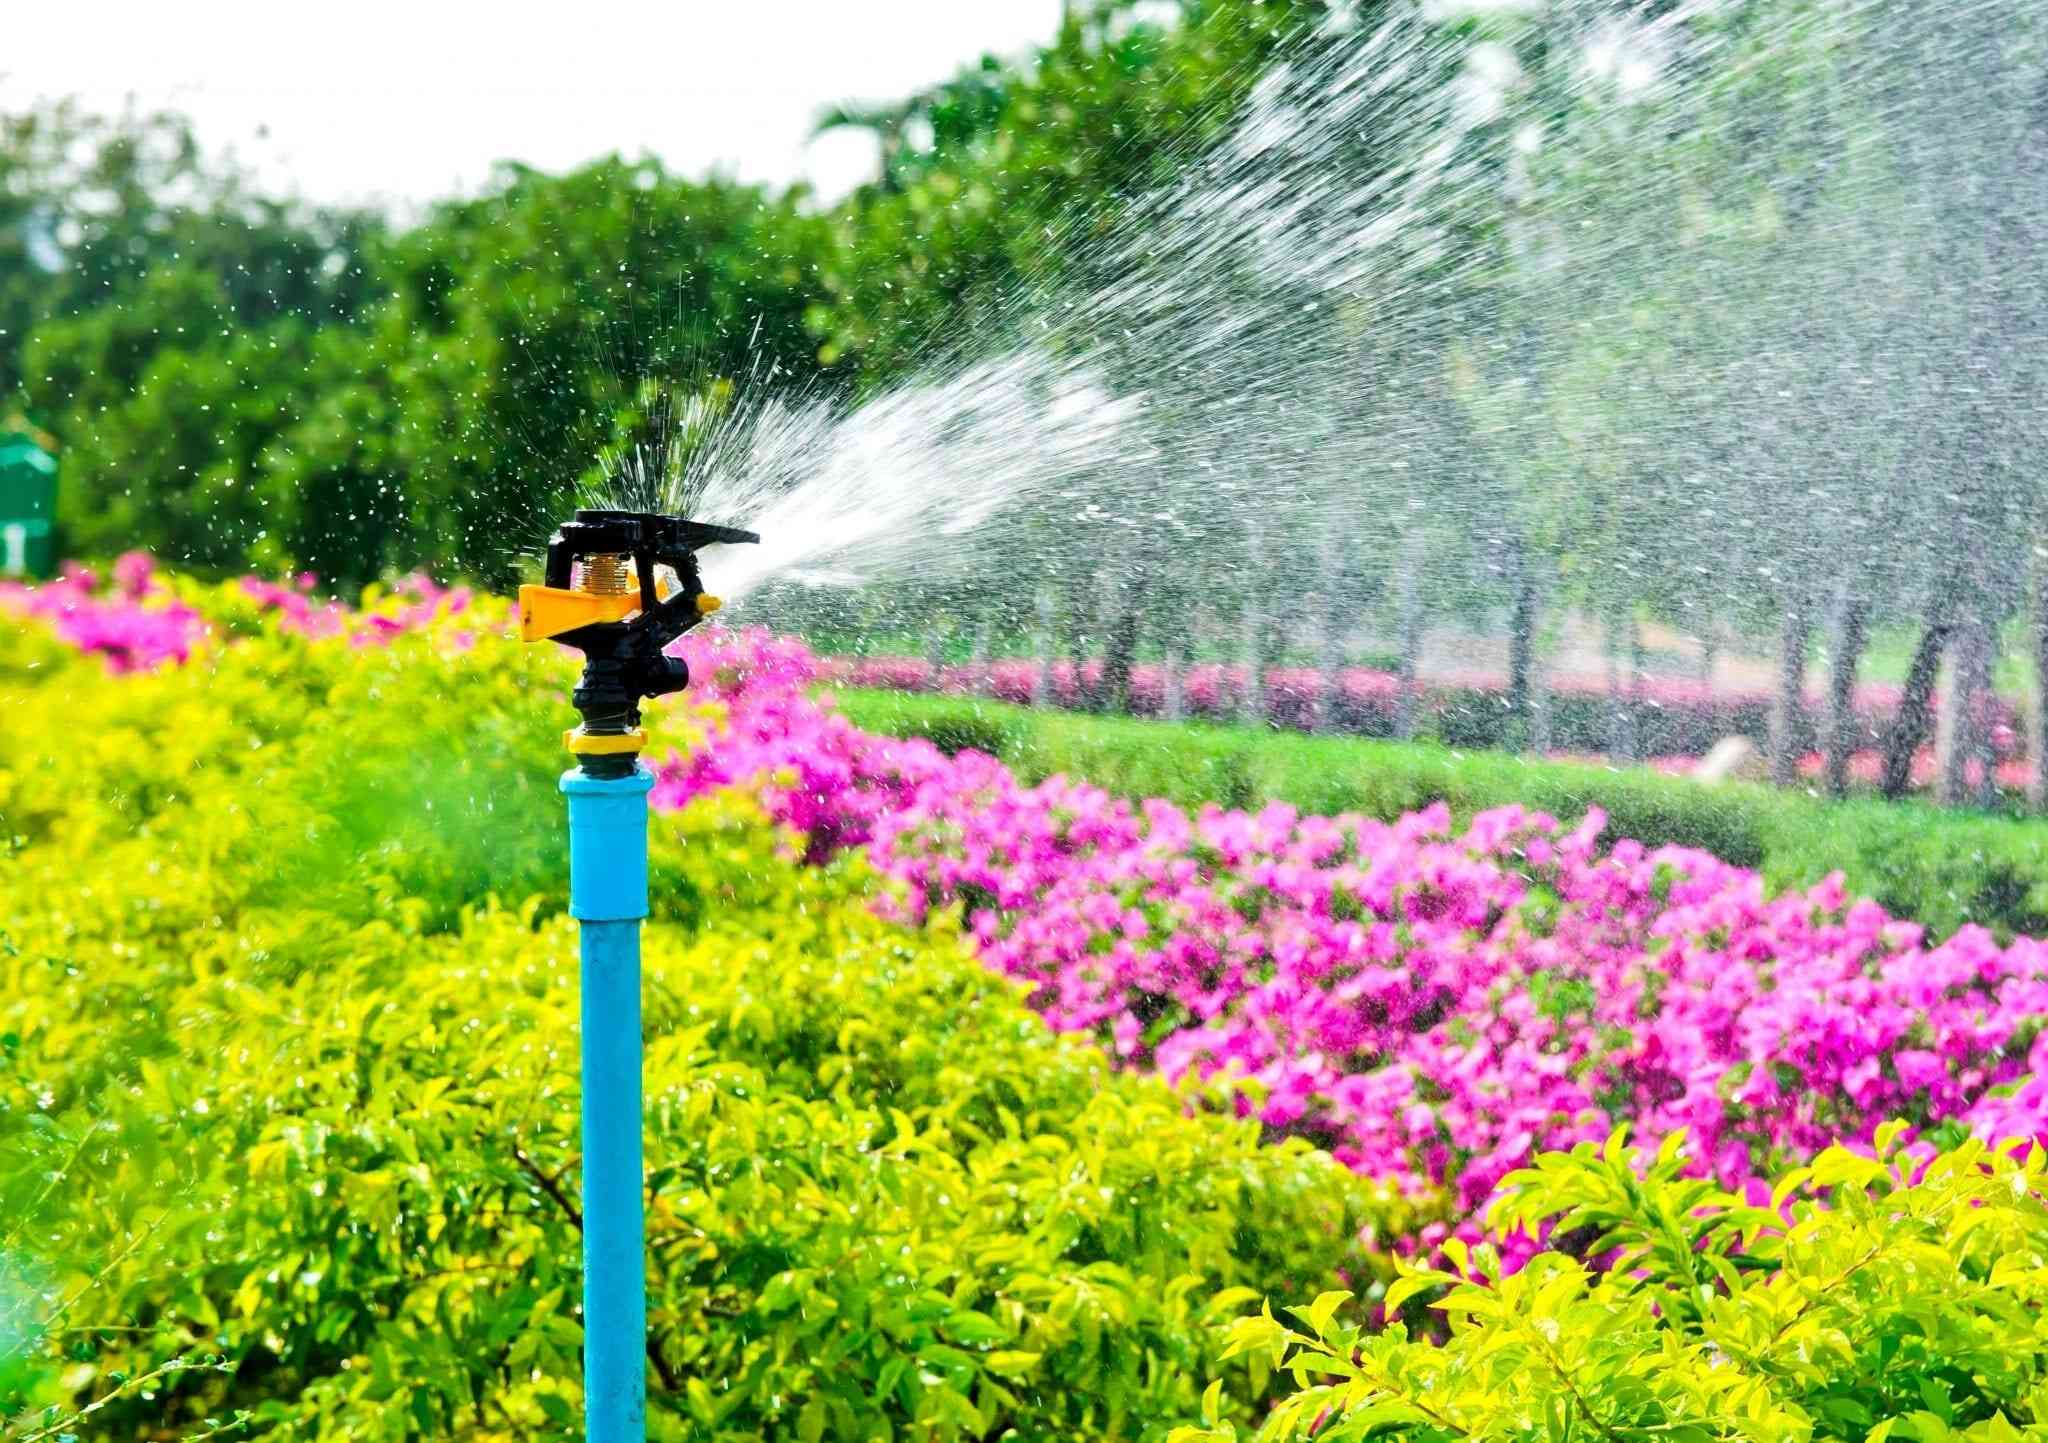 sprinkler watering purple flowers and shrubs in a park